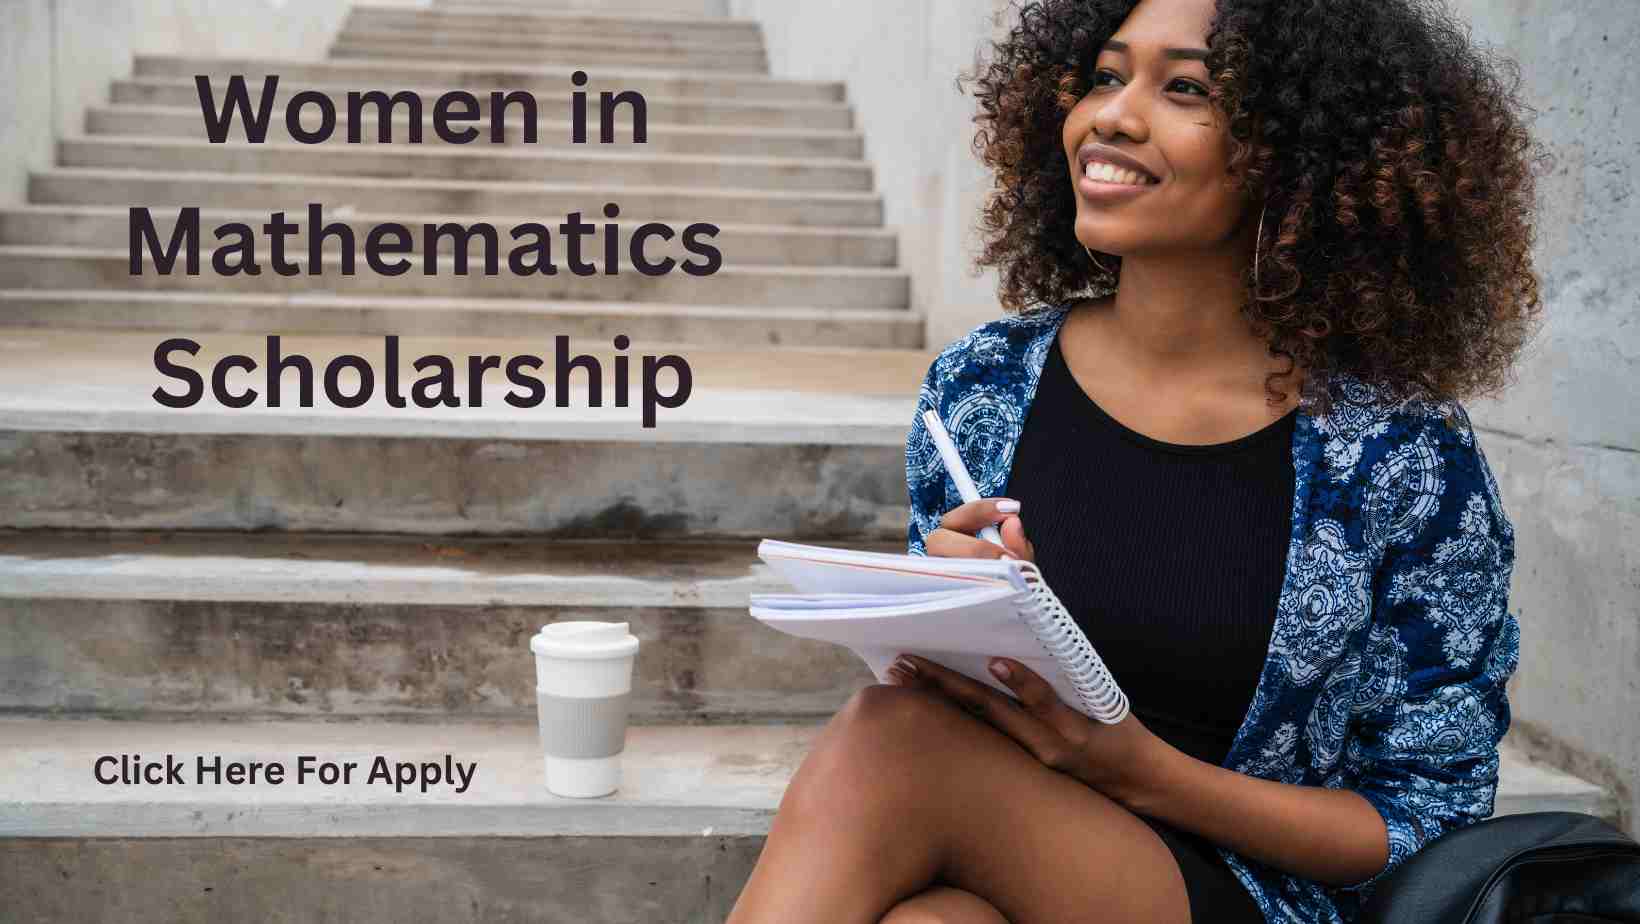 Women in Mathematics Scholarship